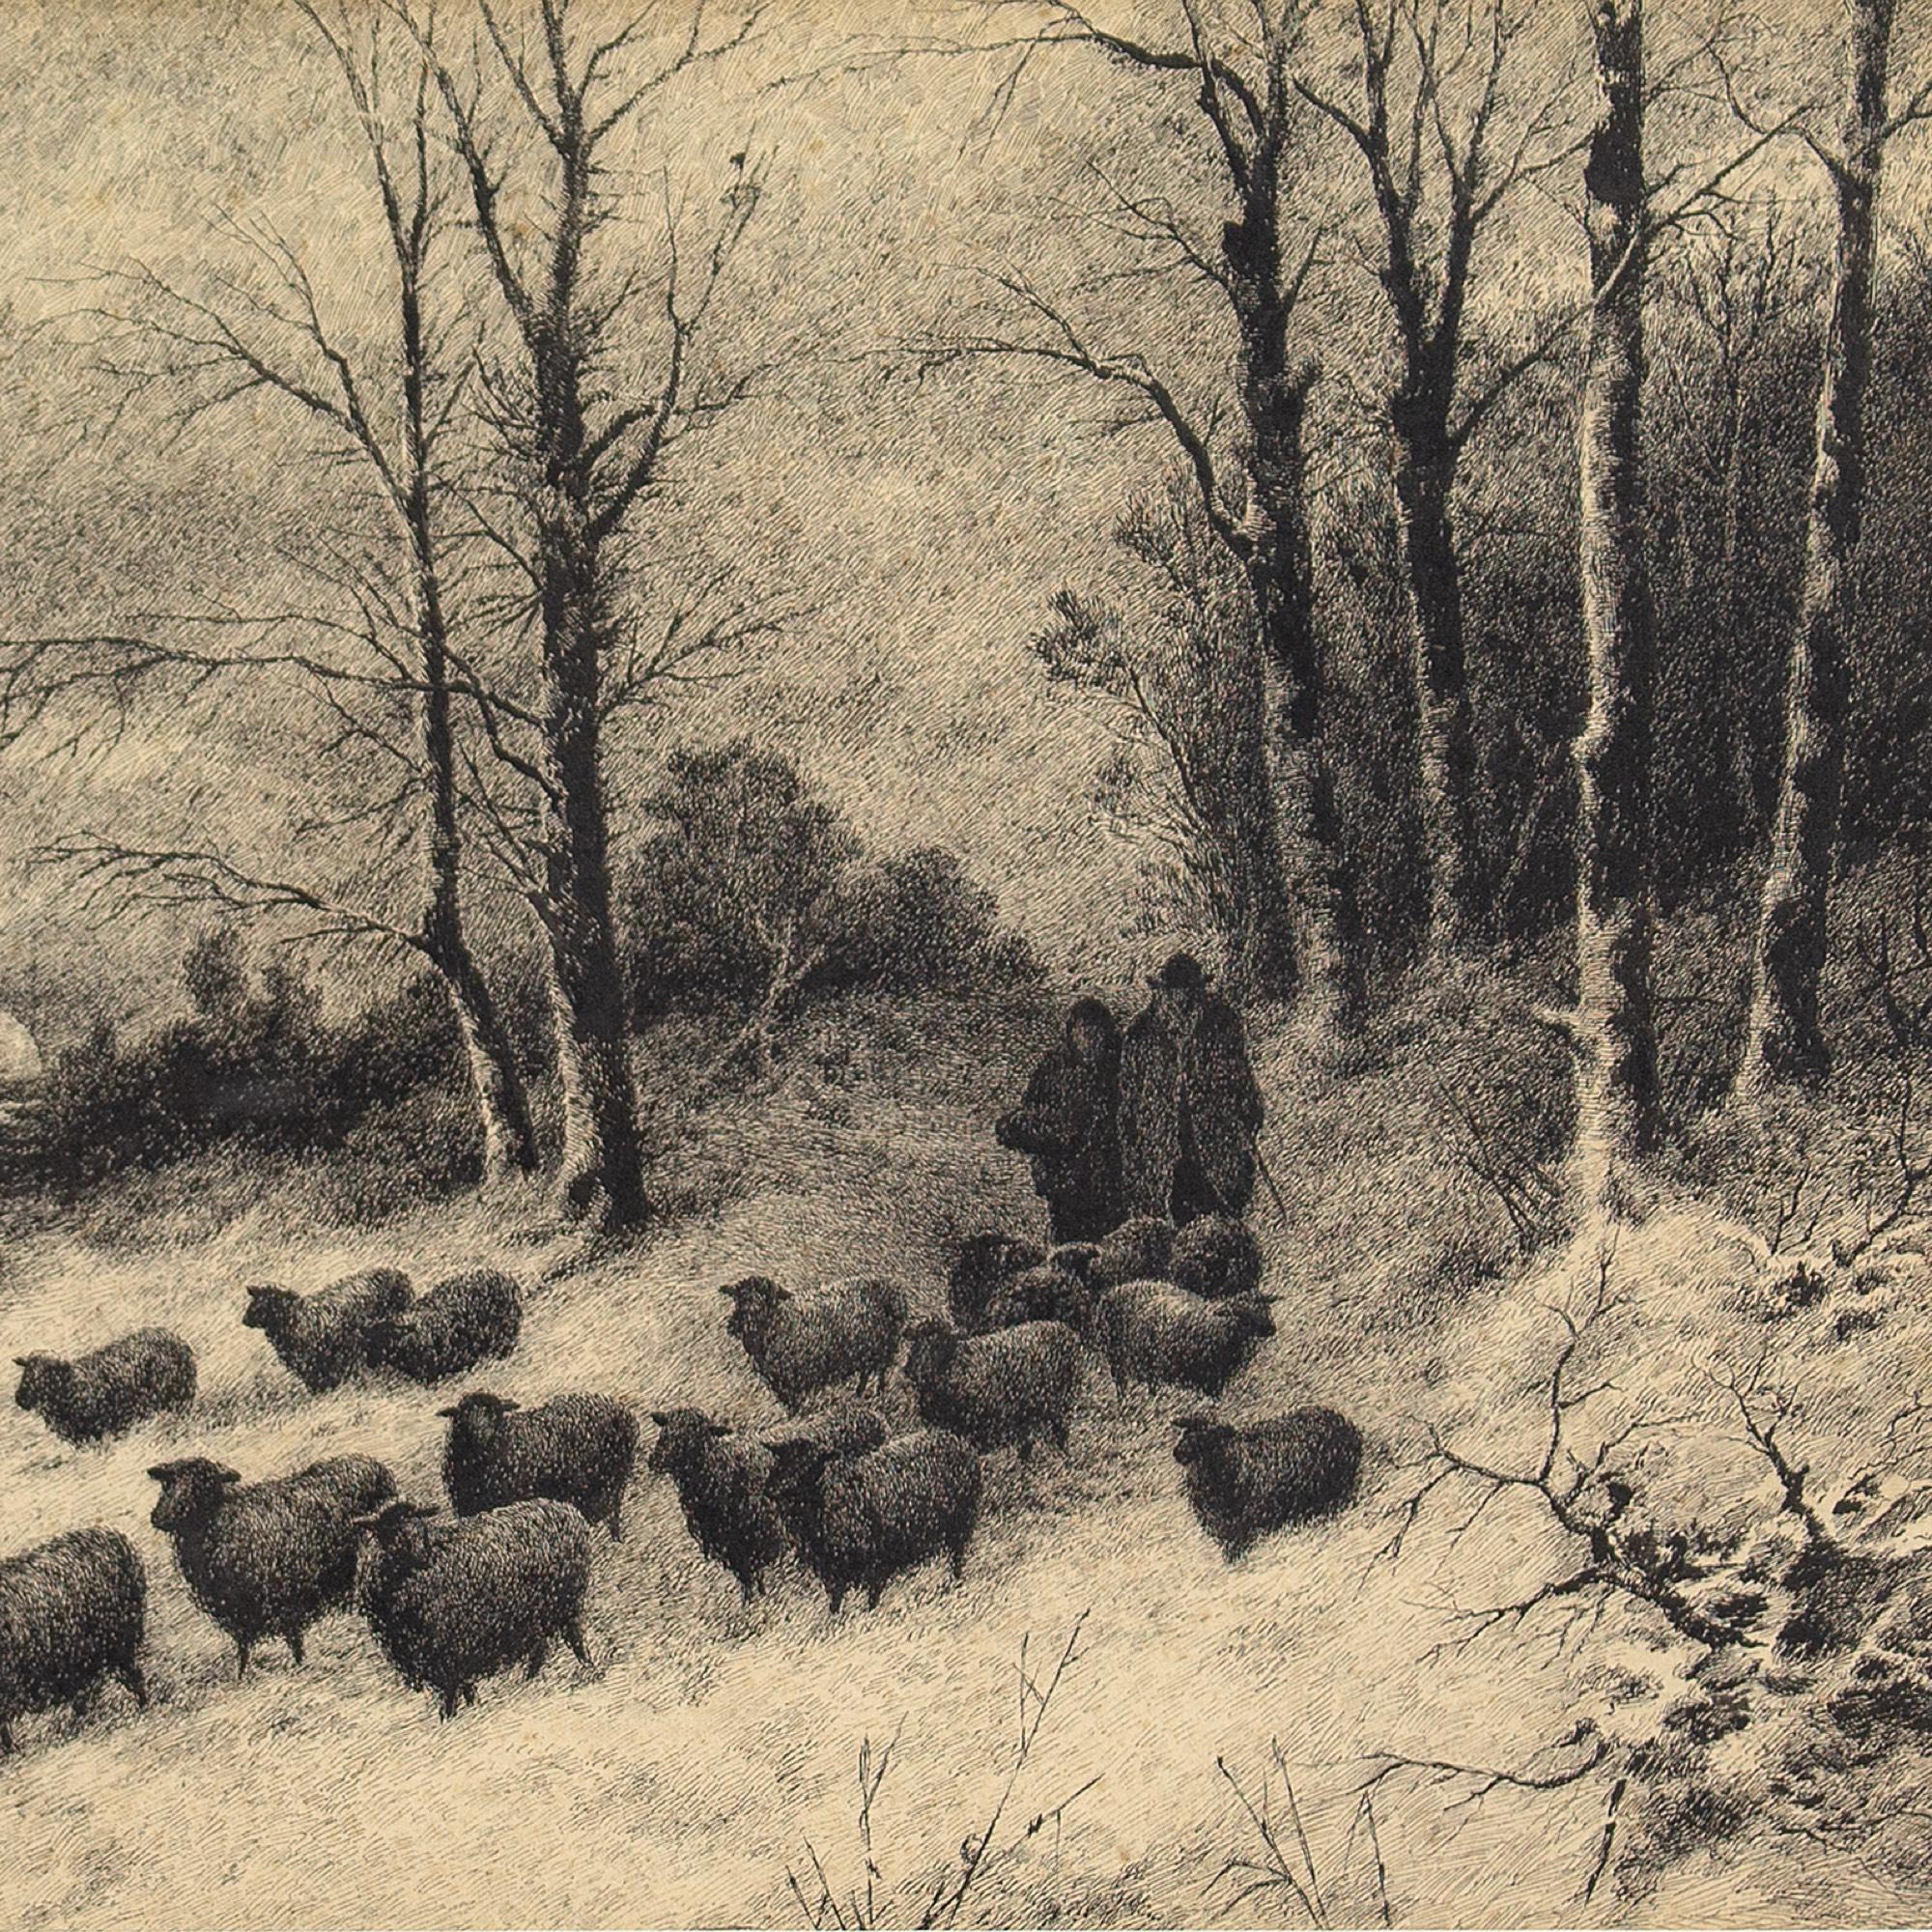 Joseph Farquharson (Circle), The Flock, Drawing 1